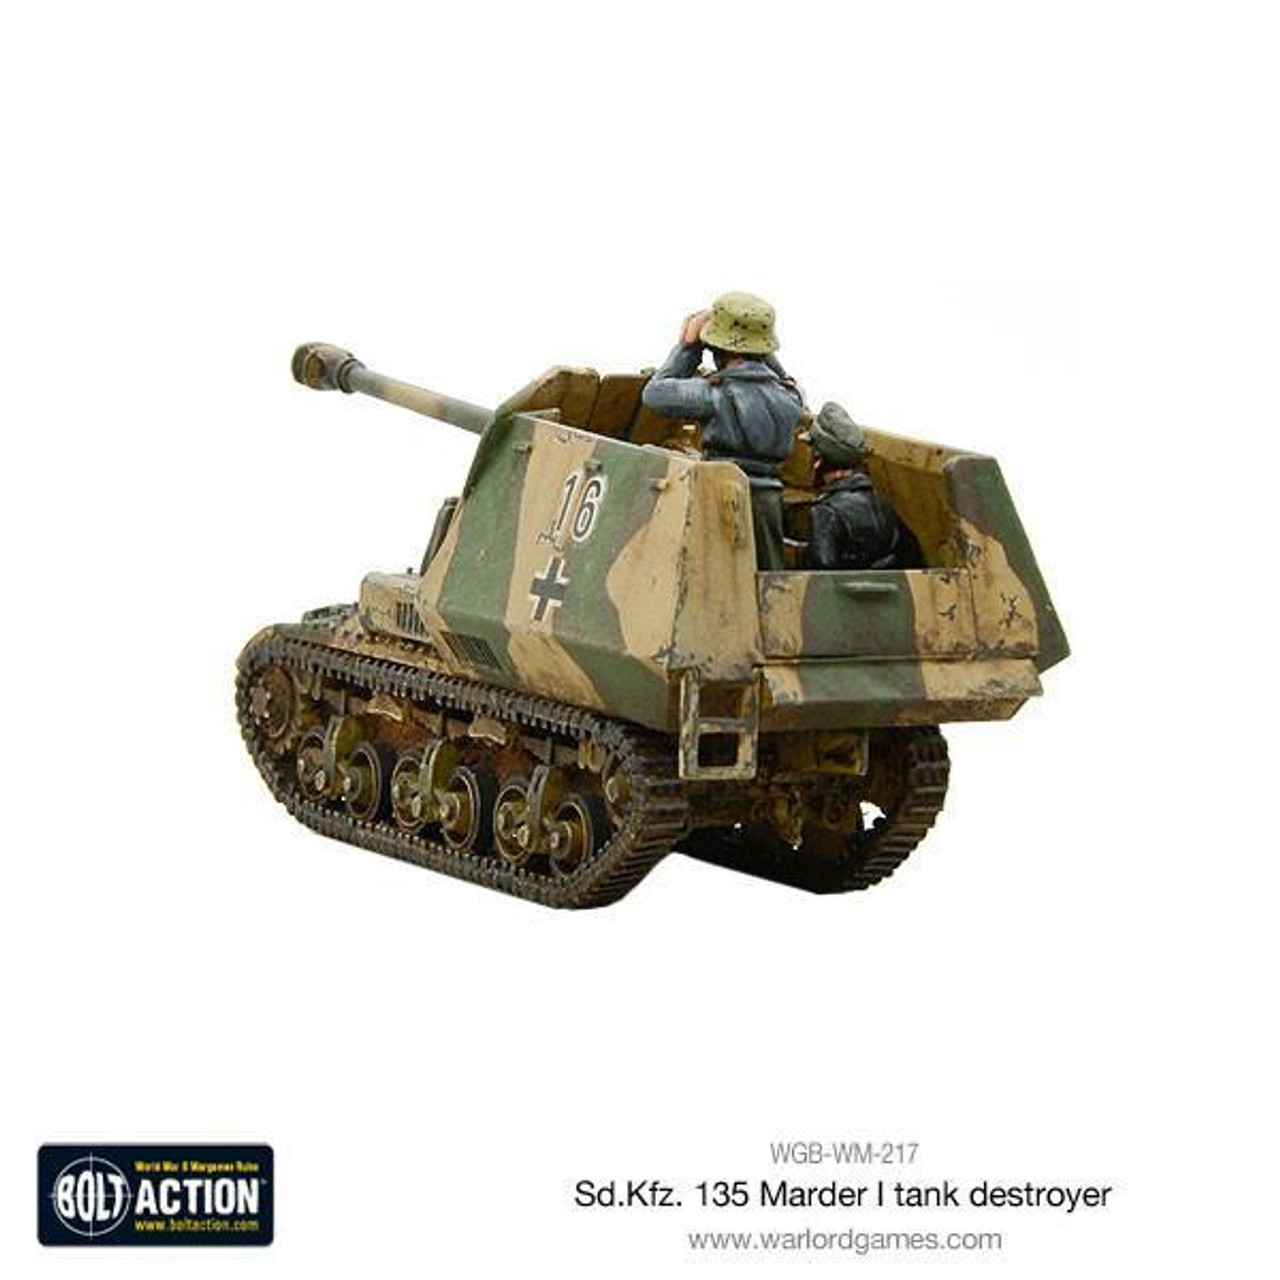 Marder I tank destroyer - WGB-WM-217